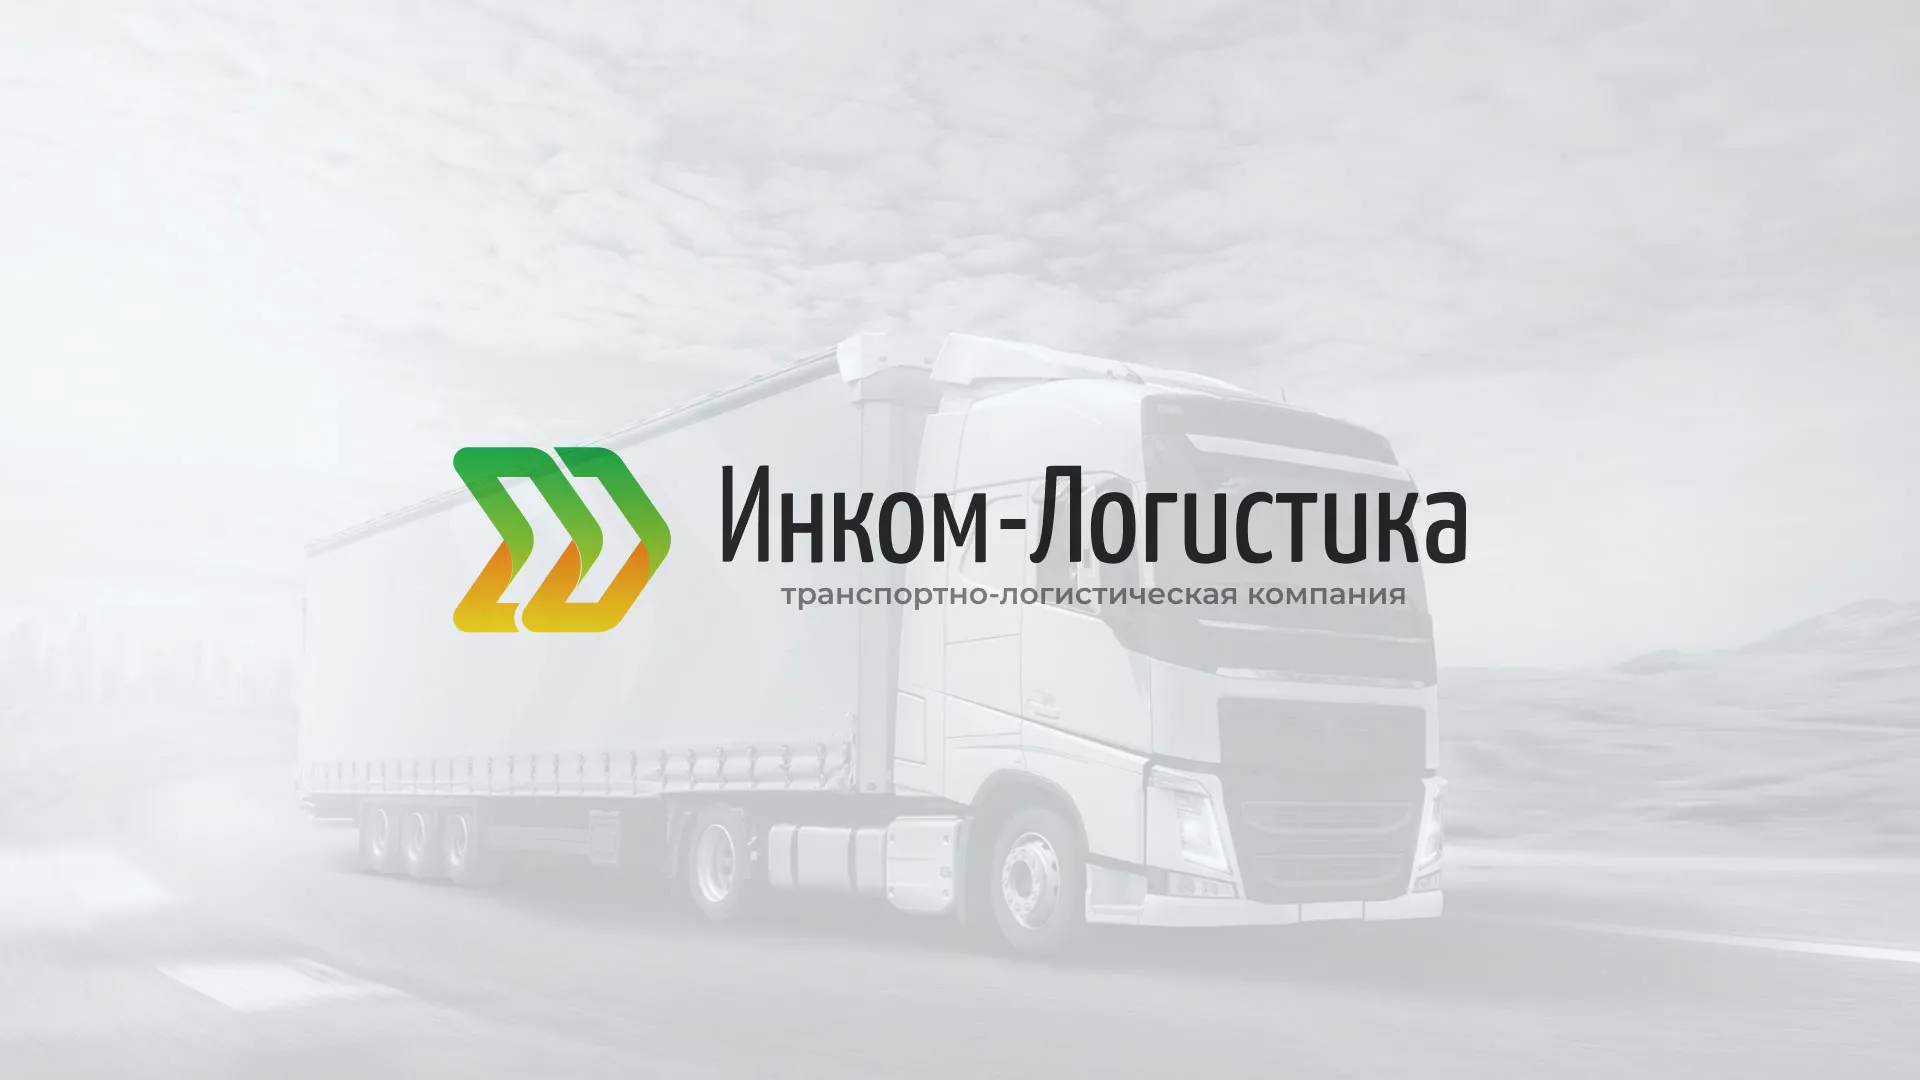 Разработка логотипа и сайта компании «Инком-Логистика» в Щелково